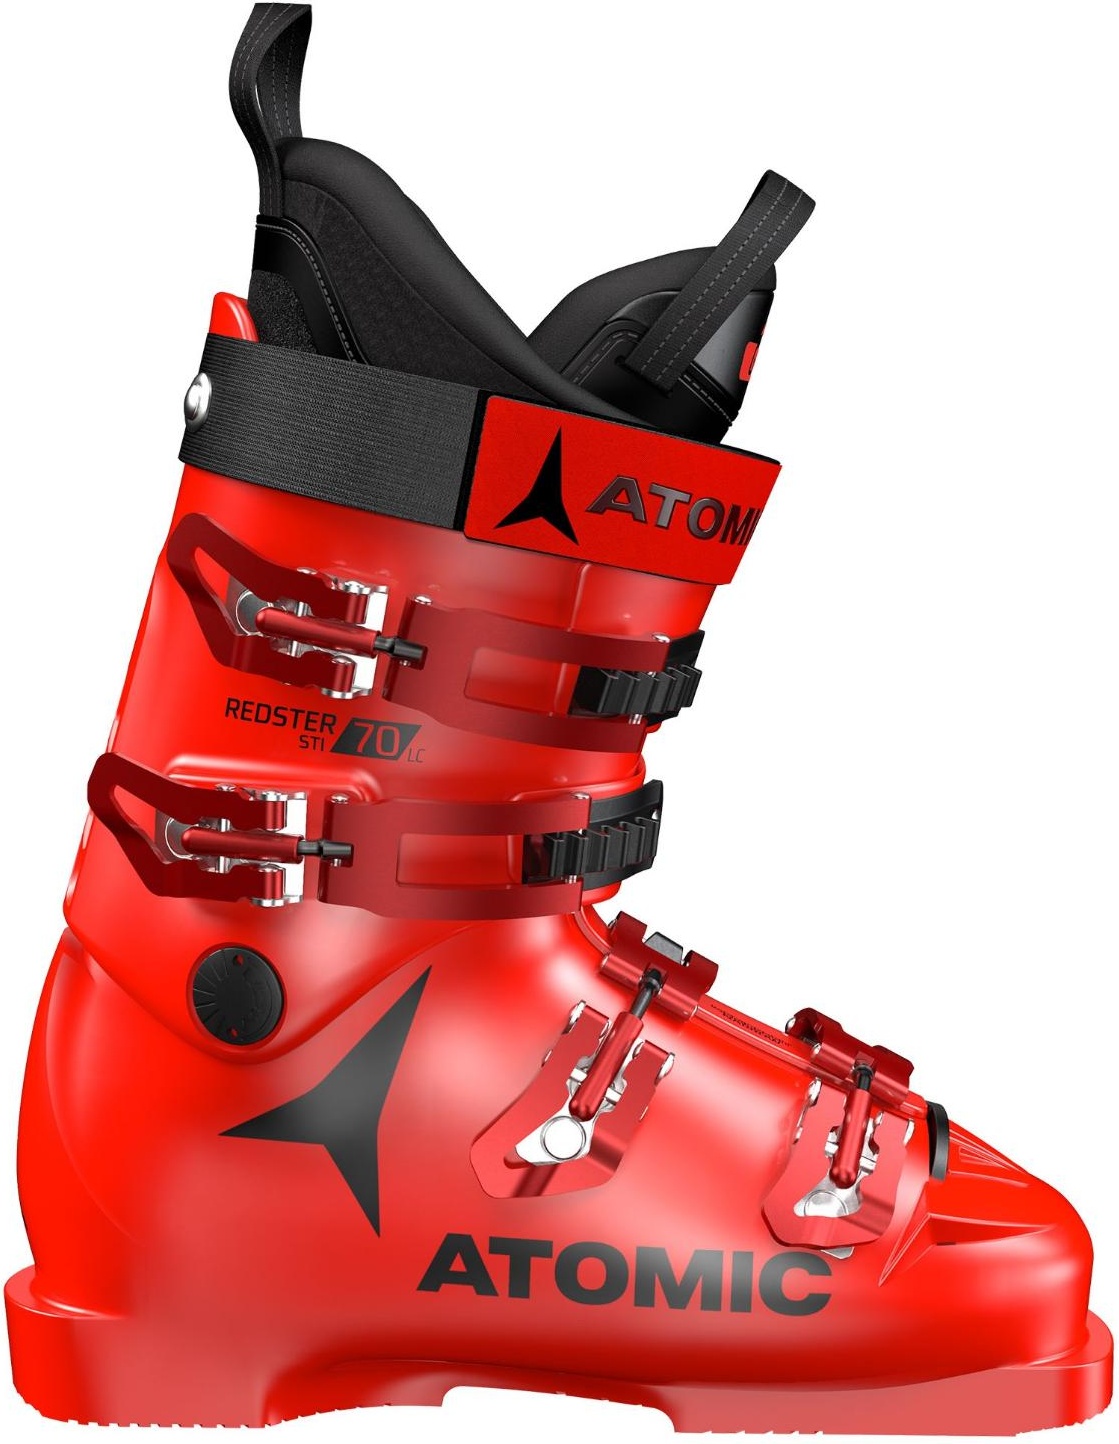 Горнолыжные ботинки Atomic Redster Sti 70 2021, red/black, 24